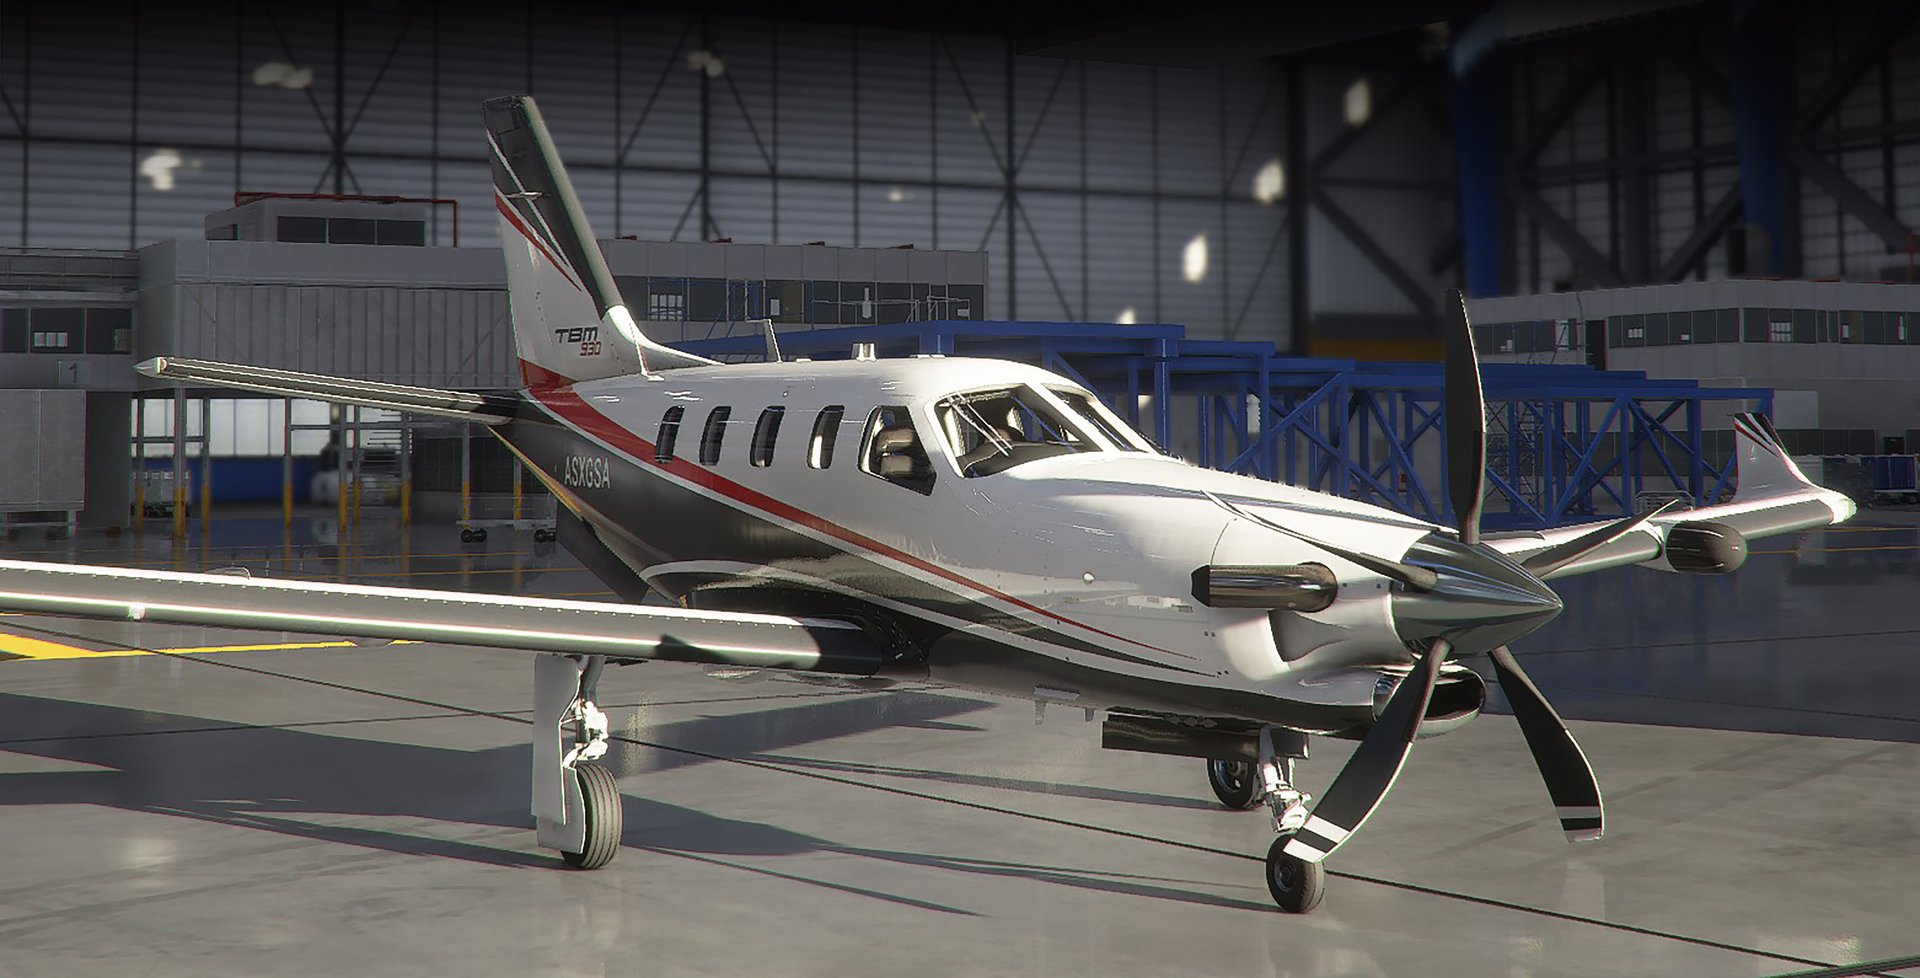 Microsoft Flight Simulator Overview - flight planning, landing challenges,  computer specs 